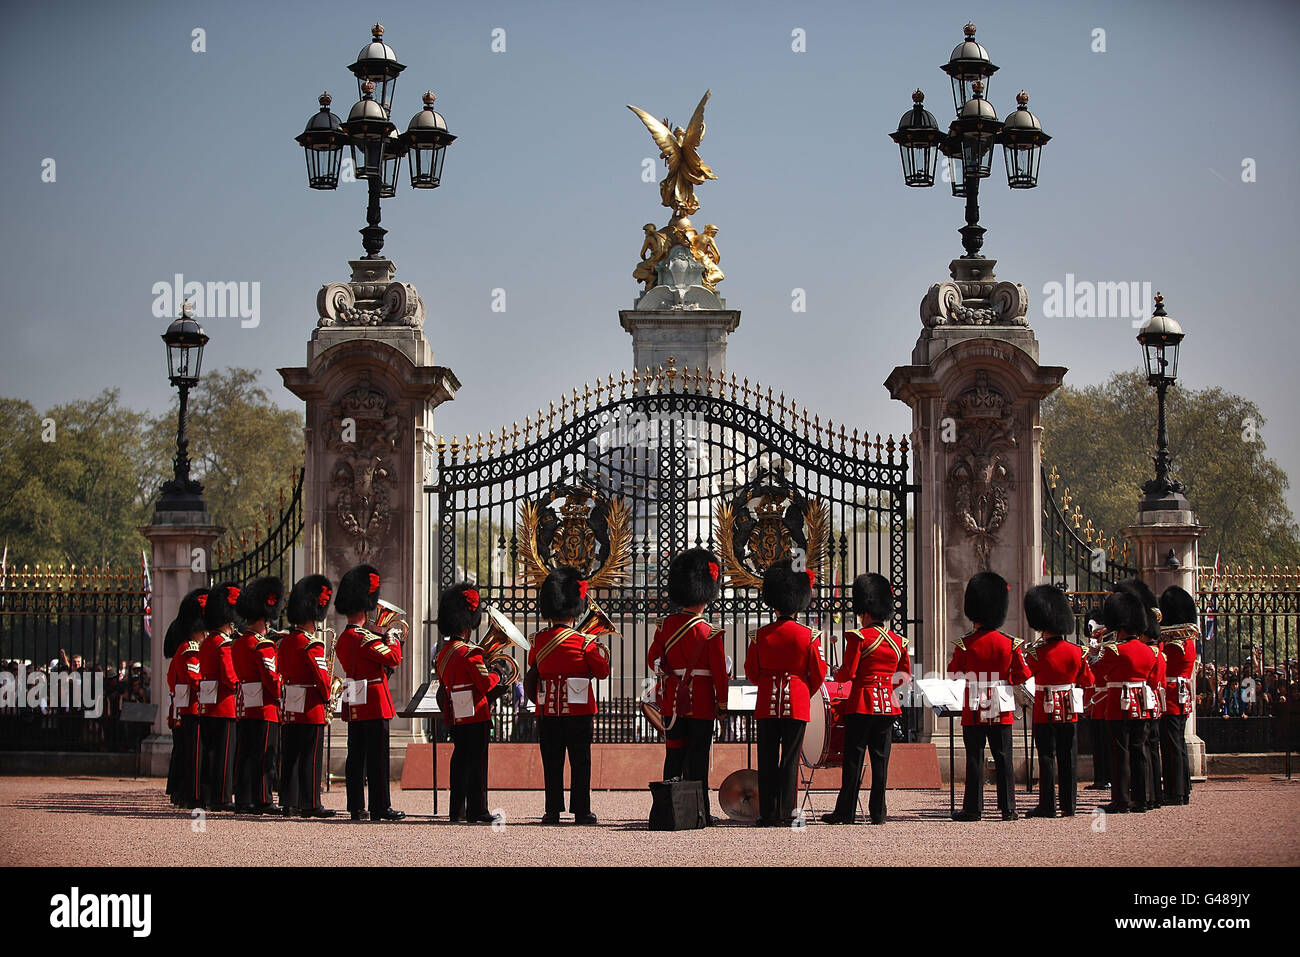 Changing of the Guard Ceremony - Buckingham Palace, London Stock Photo